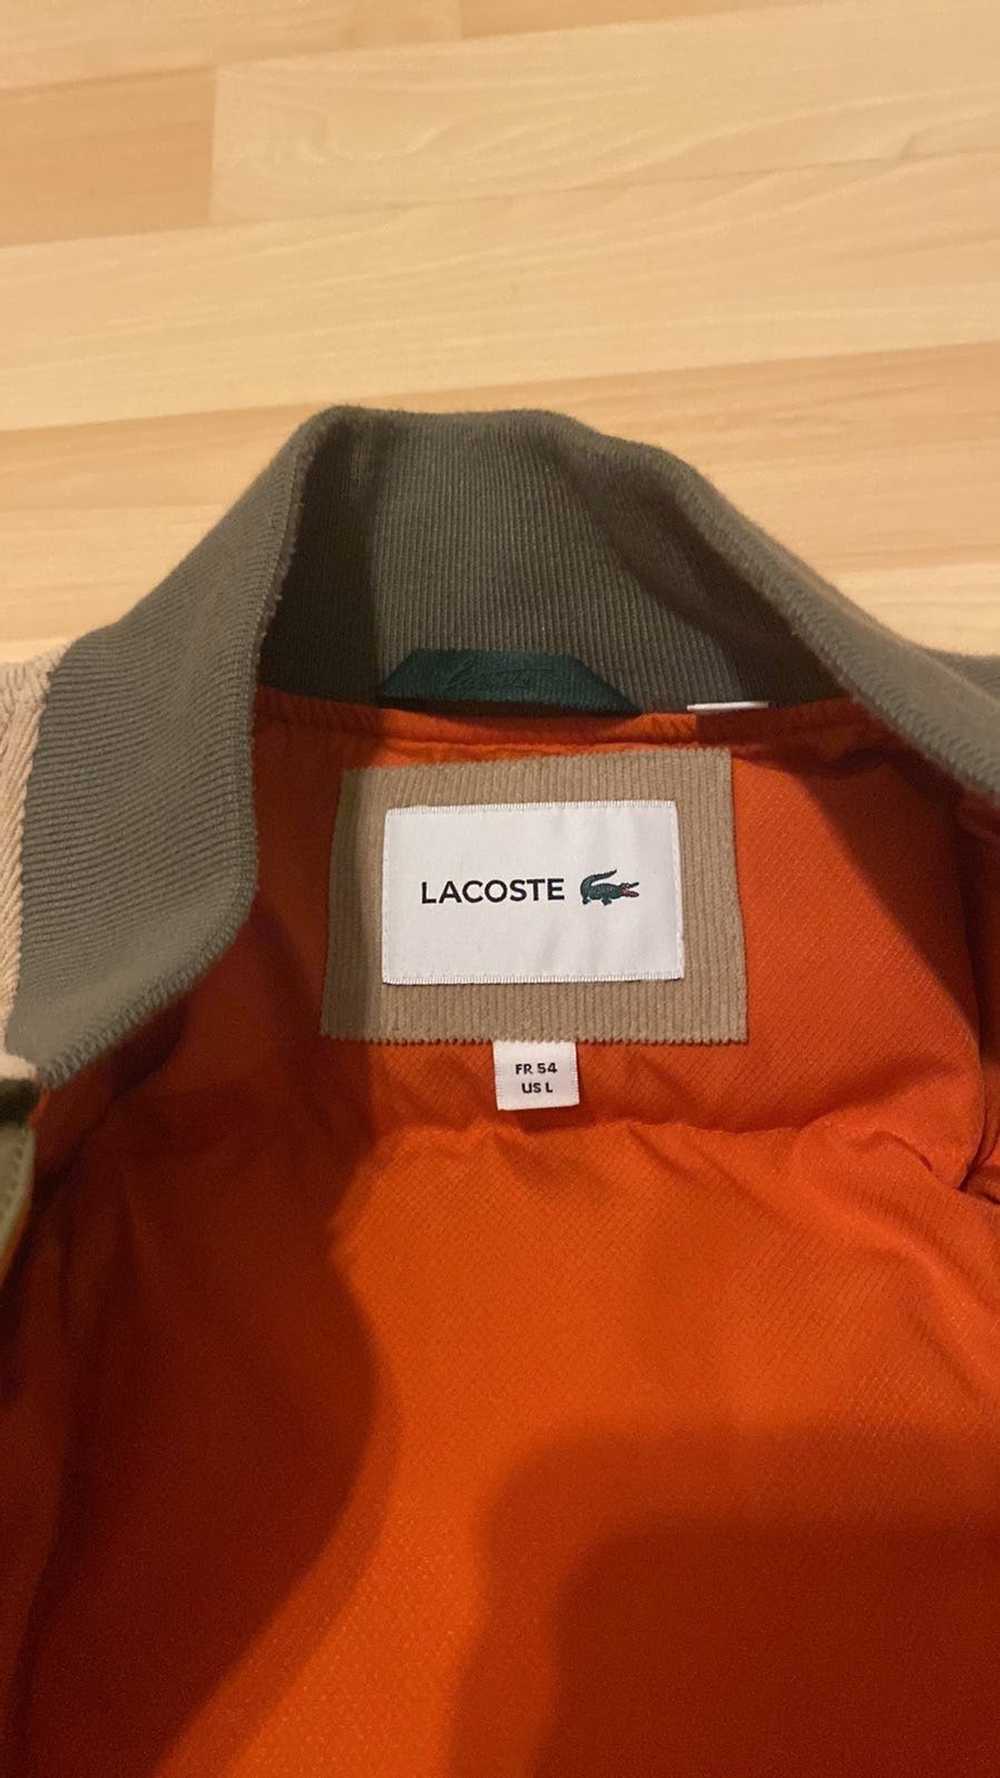 Lacoste Lacoste 2 way zip bomber jacket - image 2